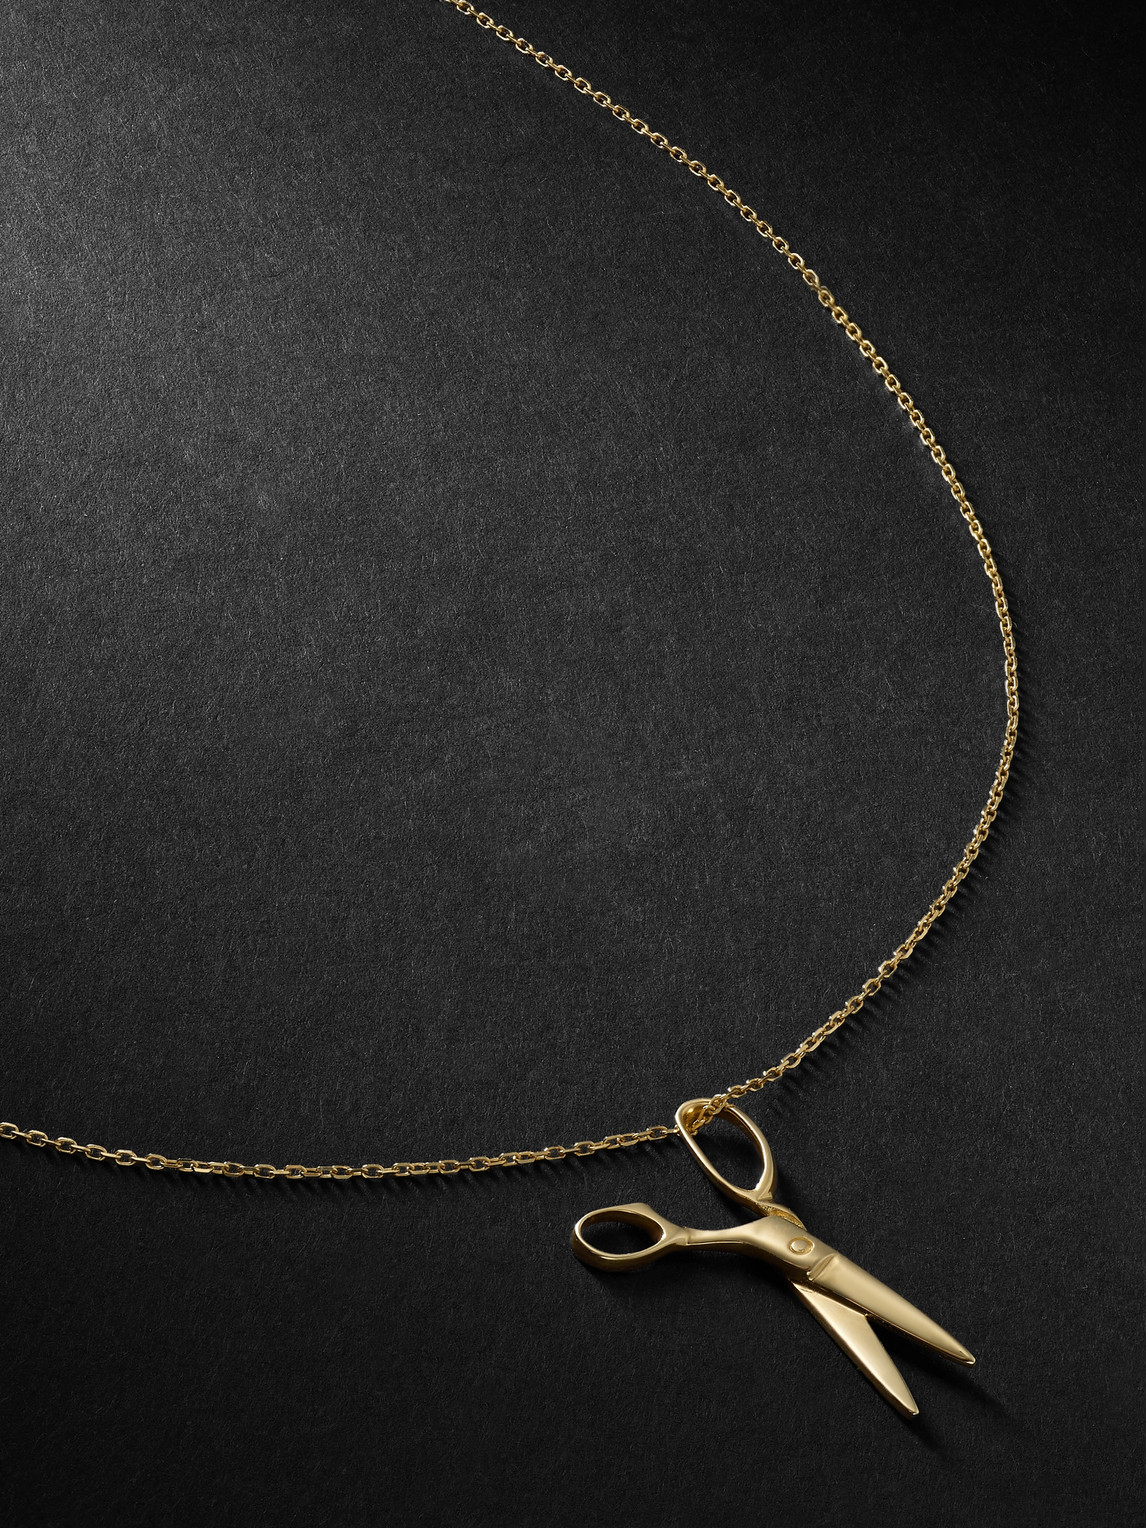 Mateo Scissor Gold Necklace